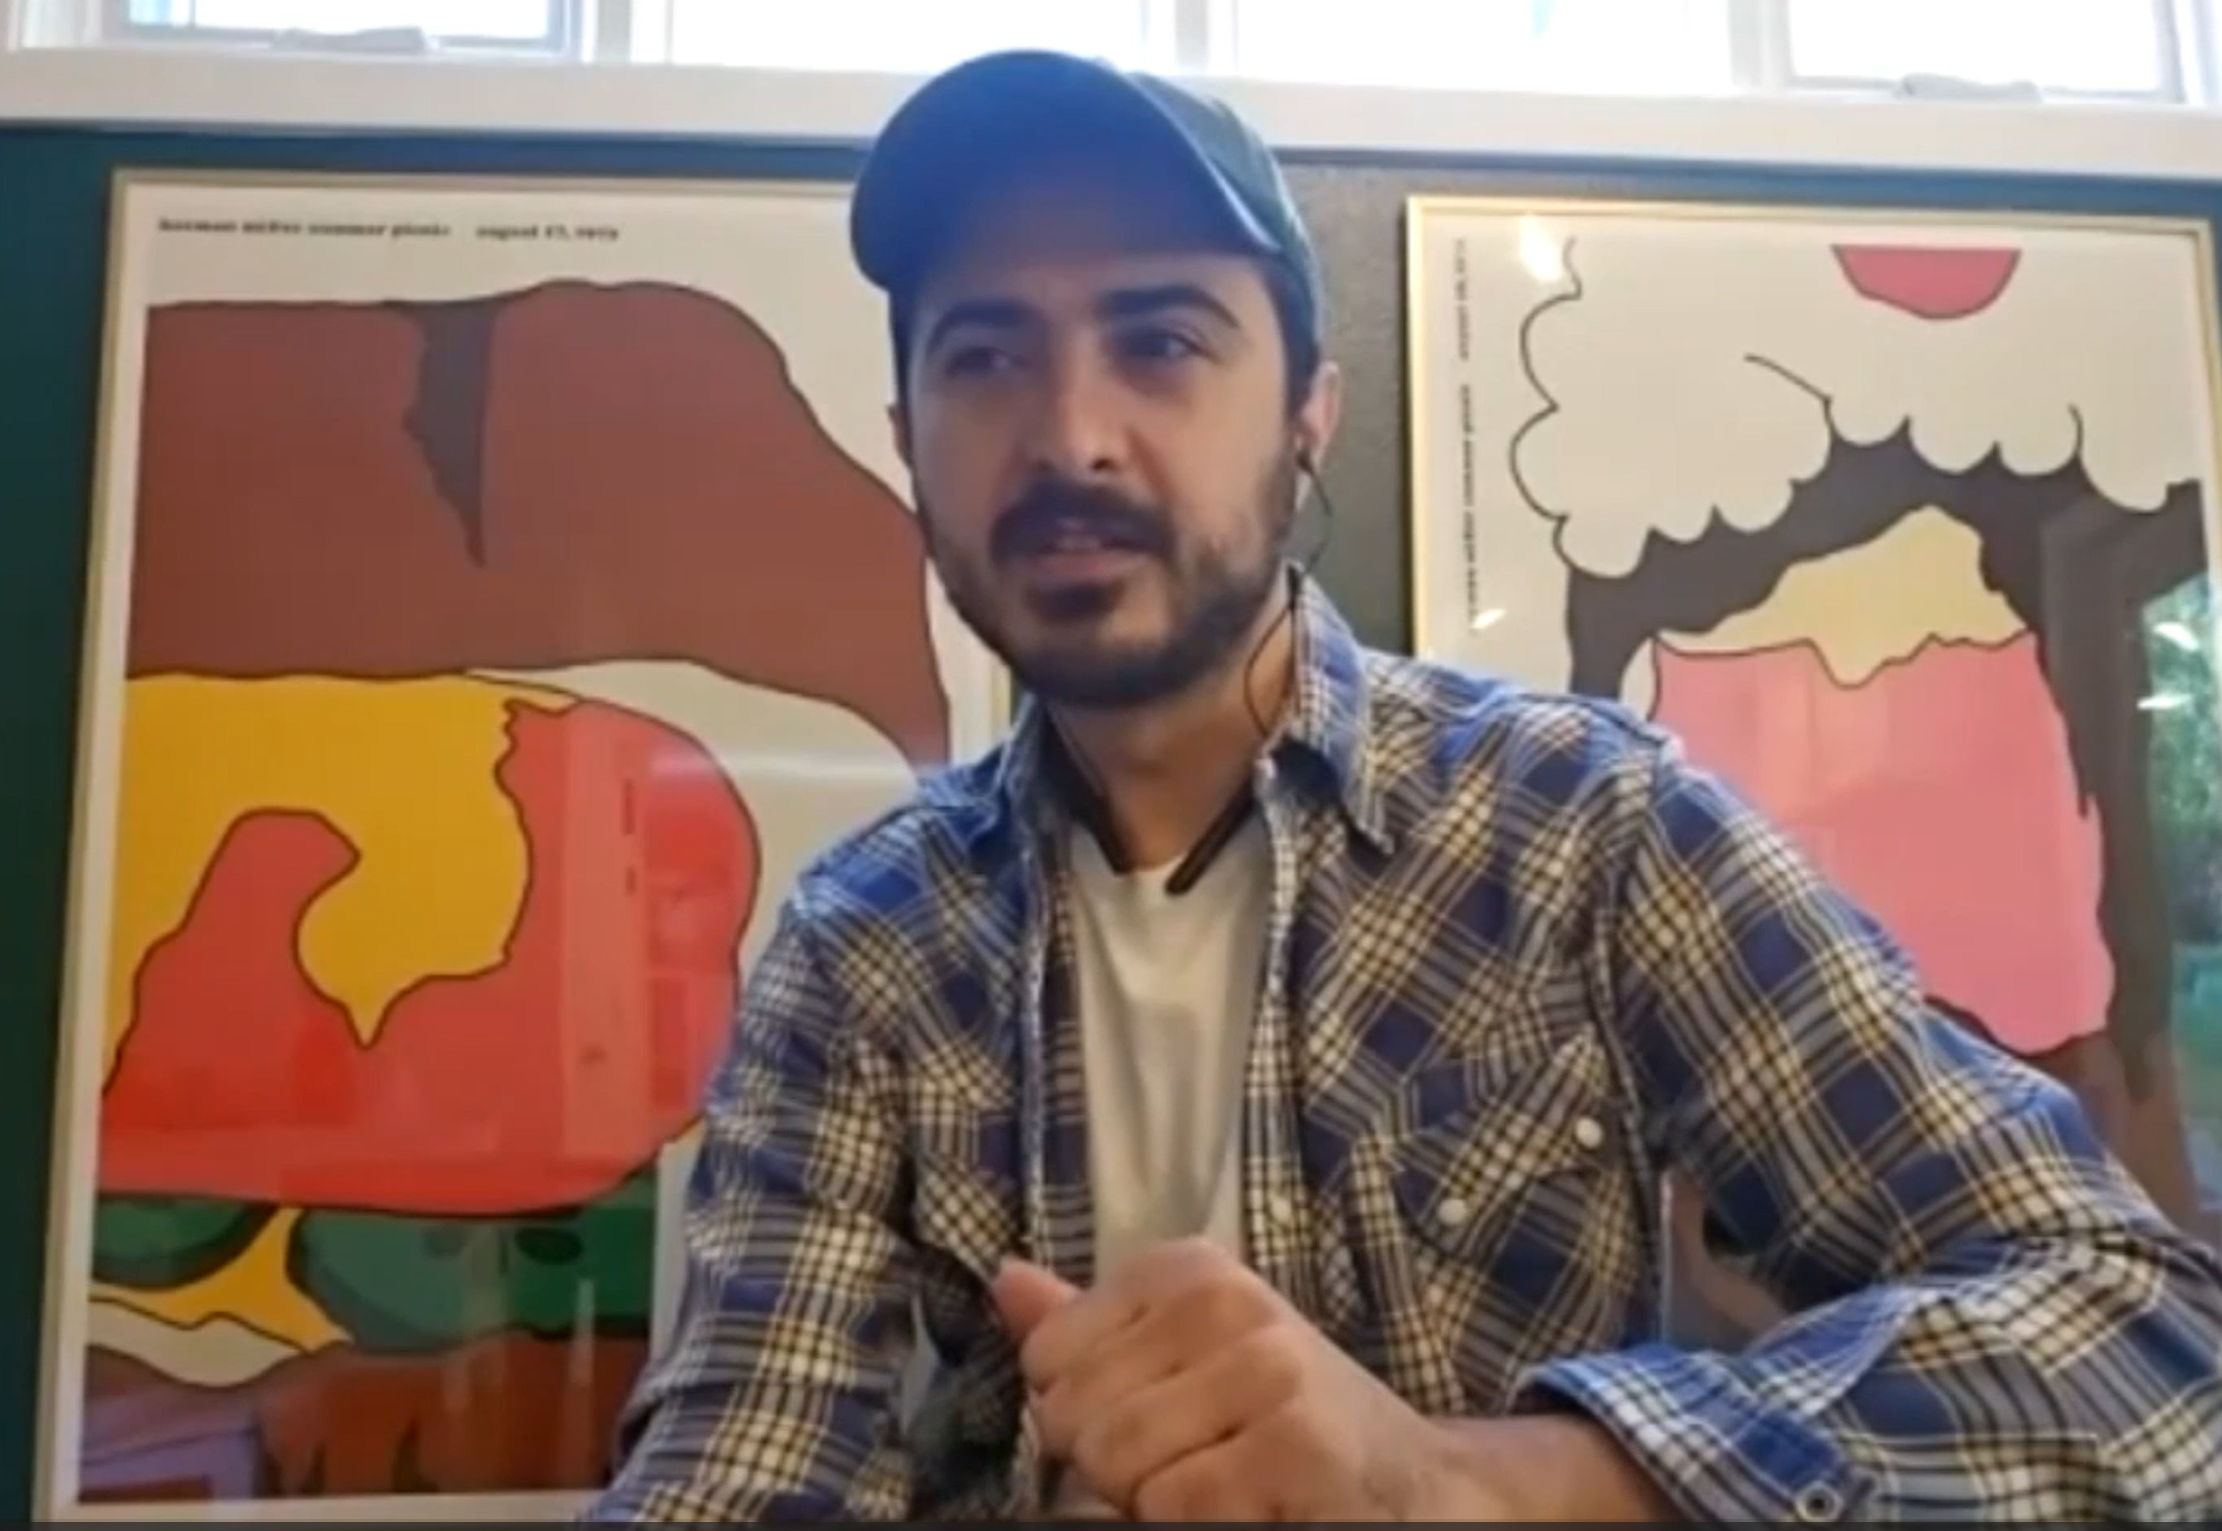 A screenshot from the video shows Farbodd Ganjifard in his dorm room wearing a plaid shirt white t shirt and a baseball cap